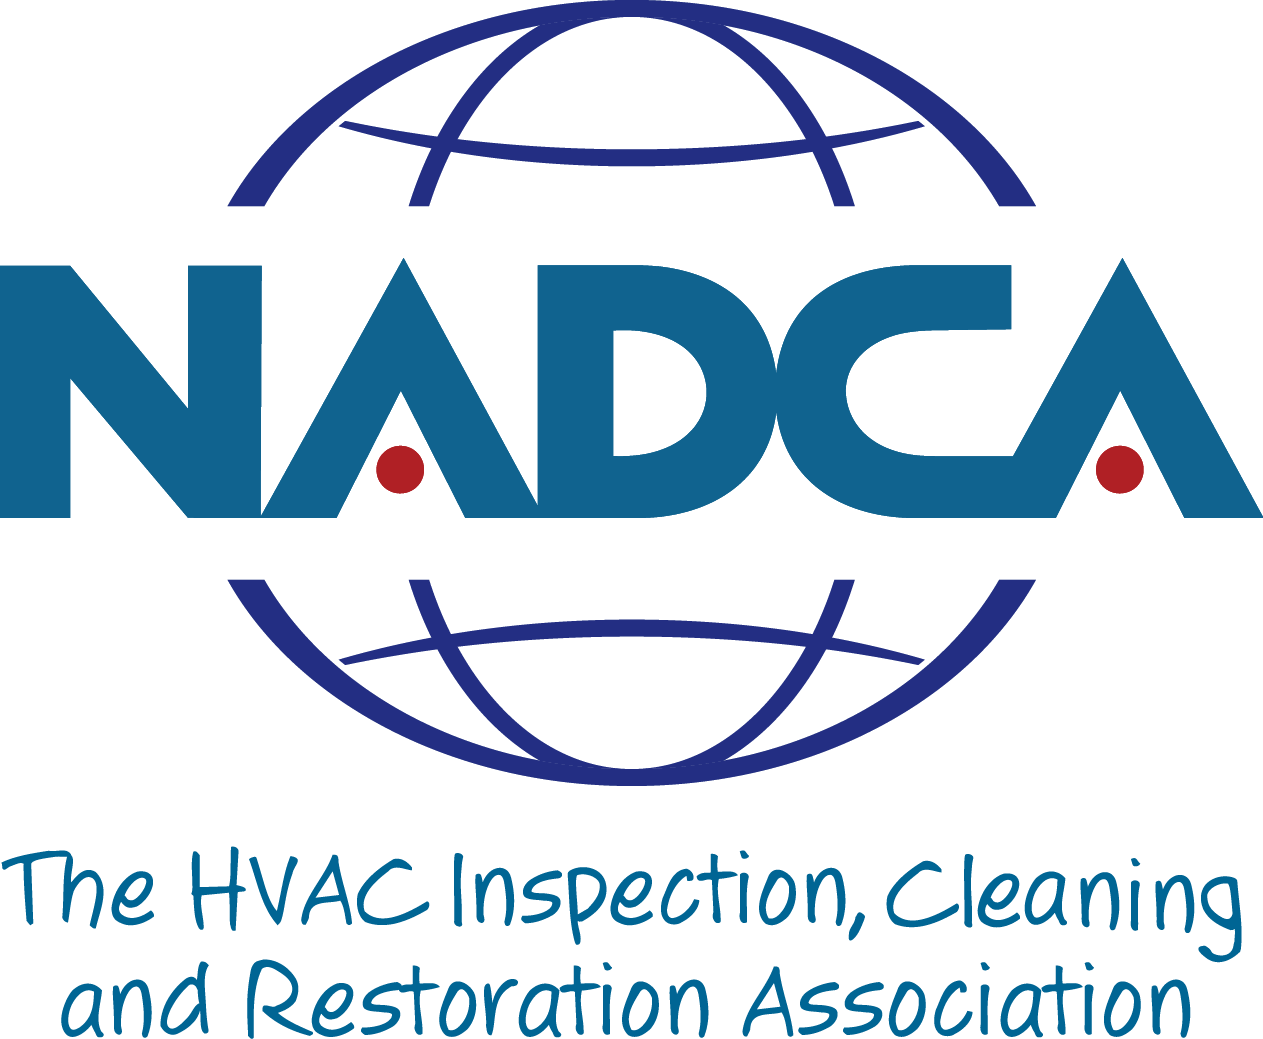 NADCA is a proud sponser of Women In HVACR.